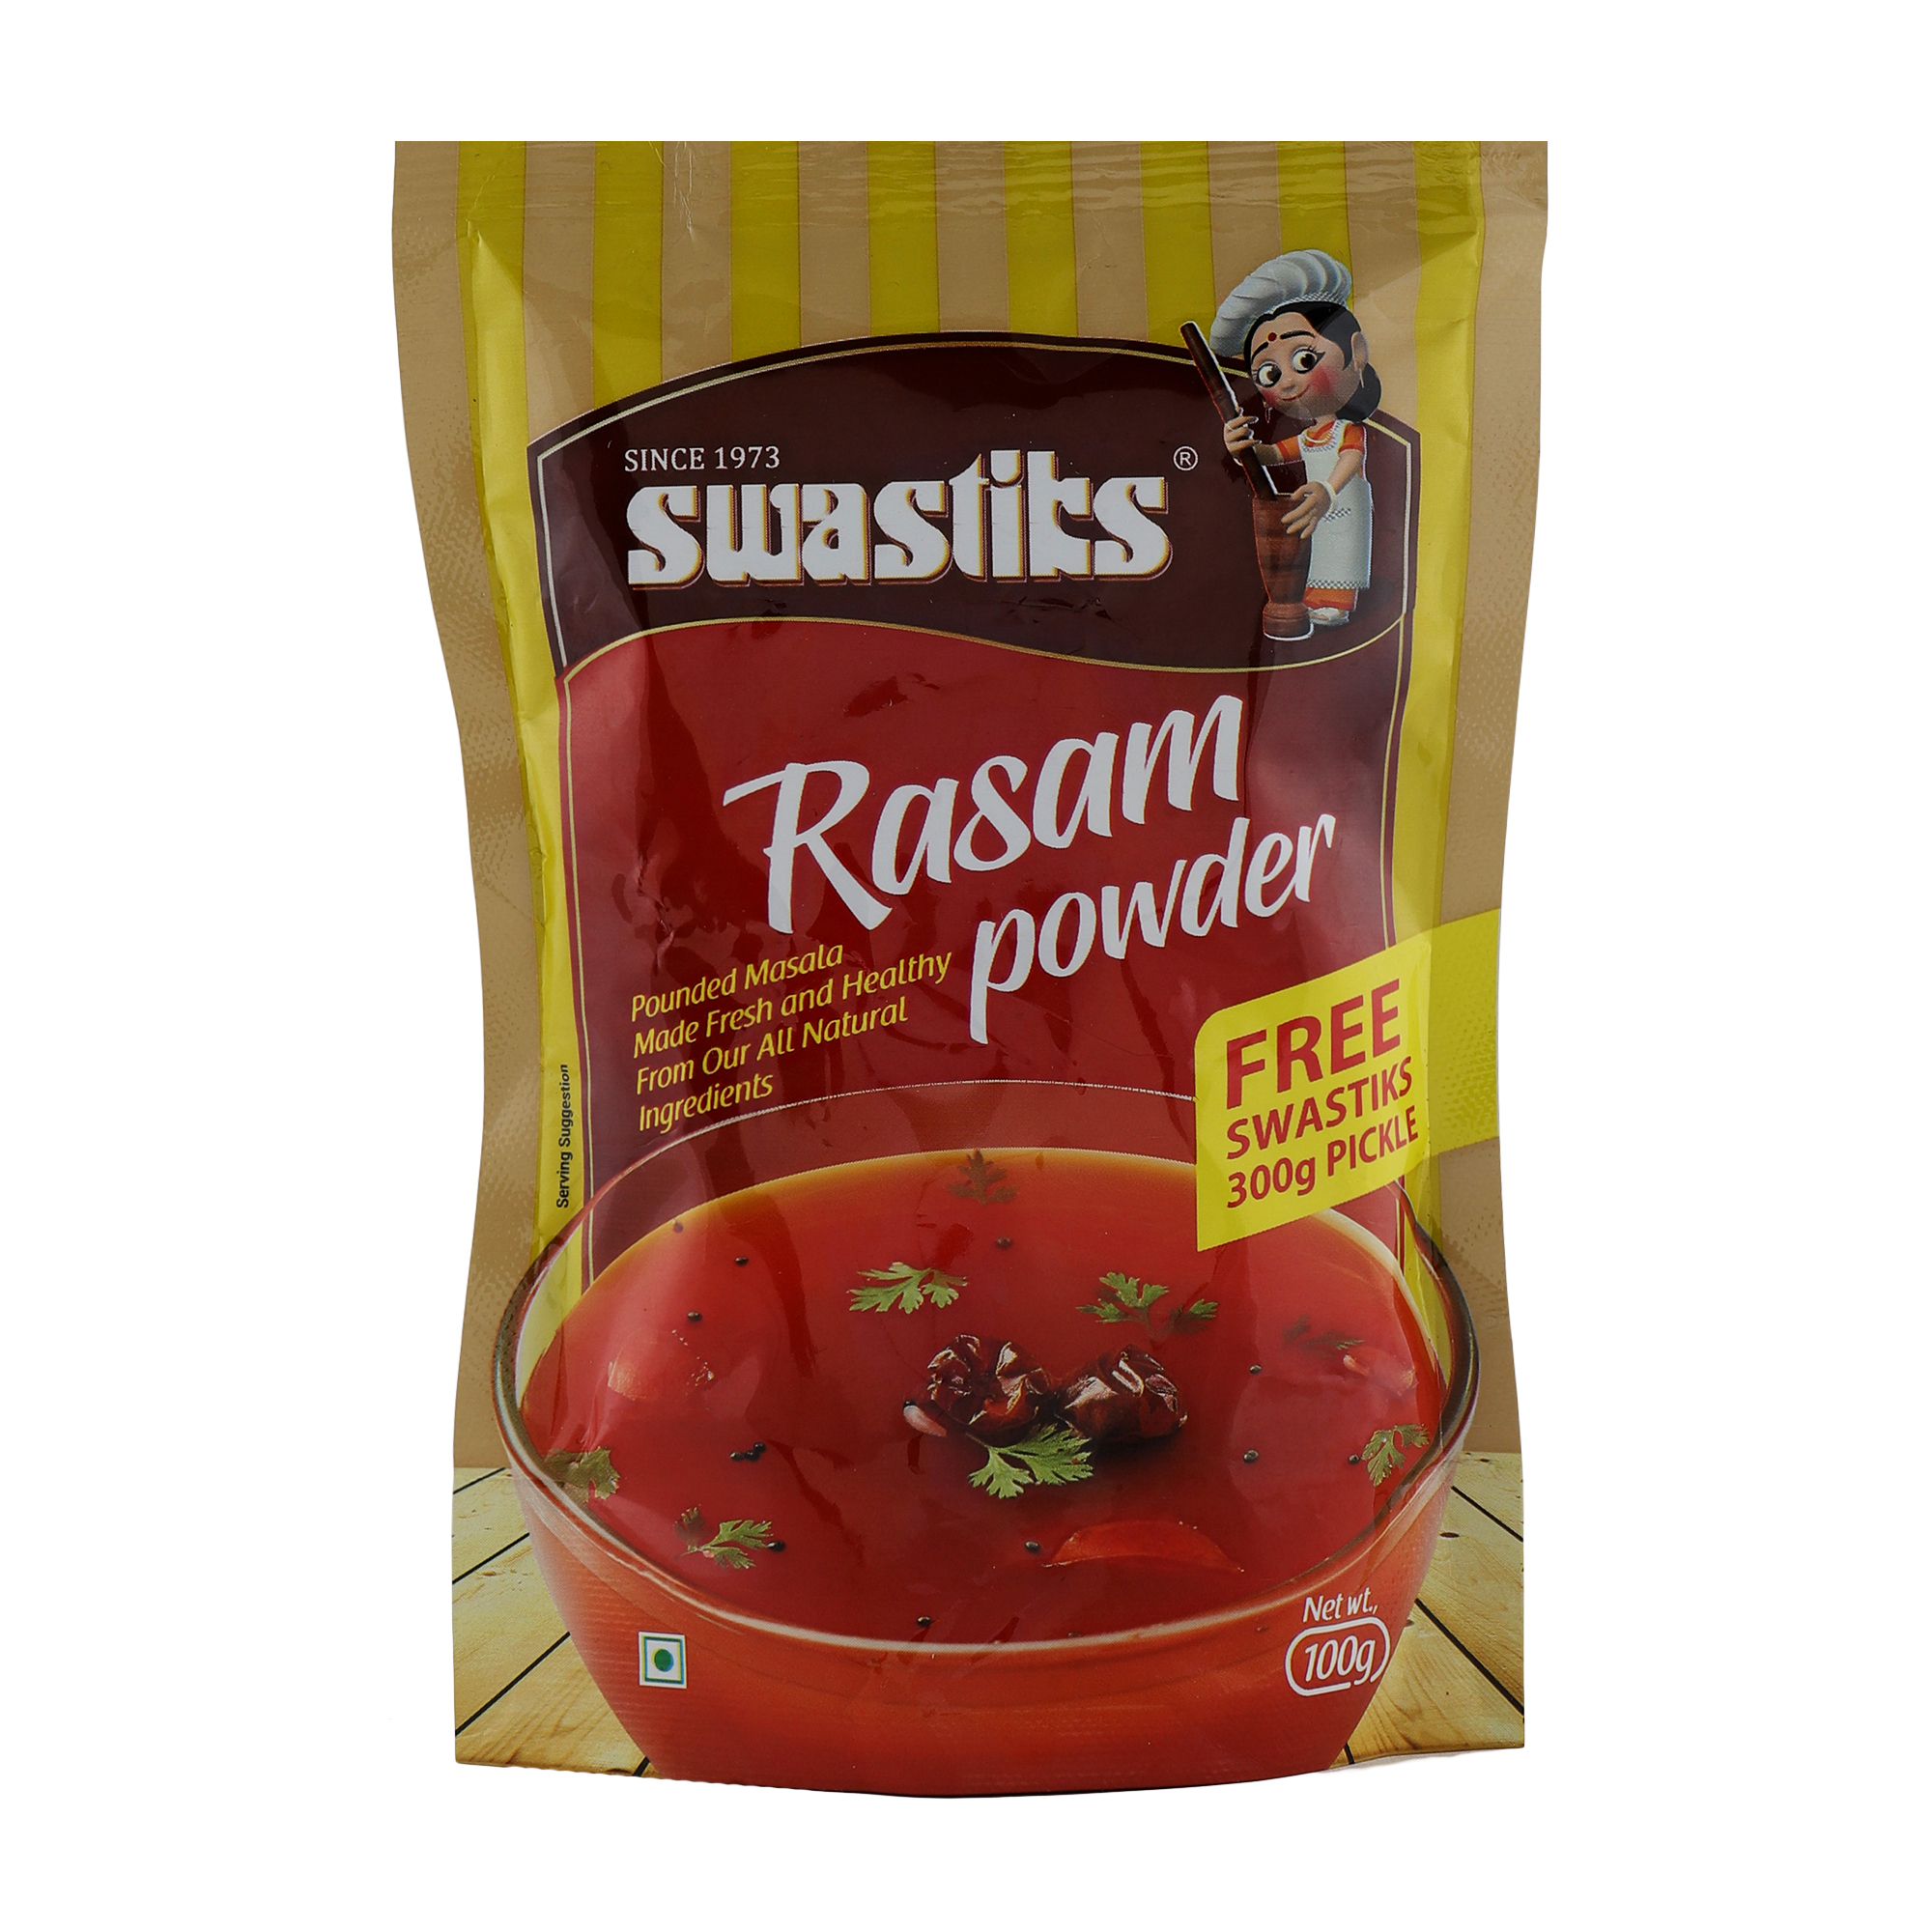 Swastiks Rasam Powder 100g (Free 300g Pickle)